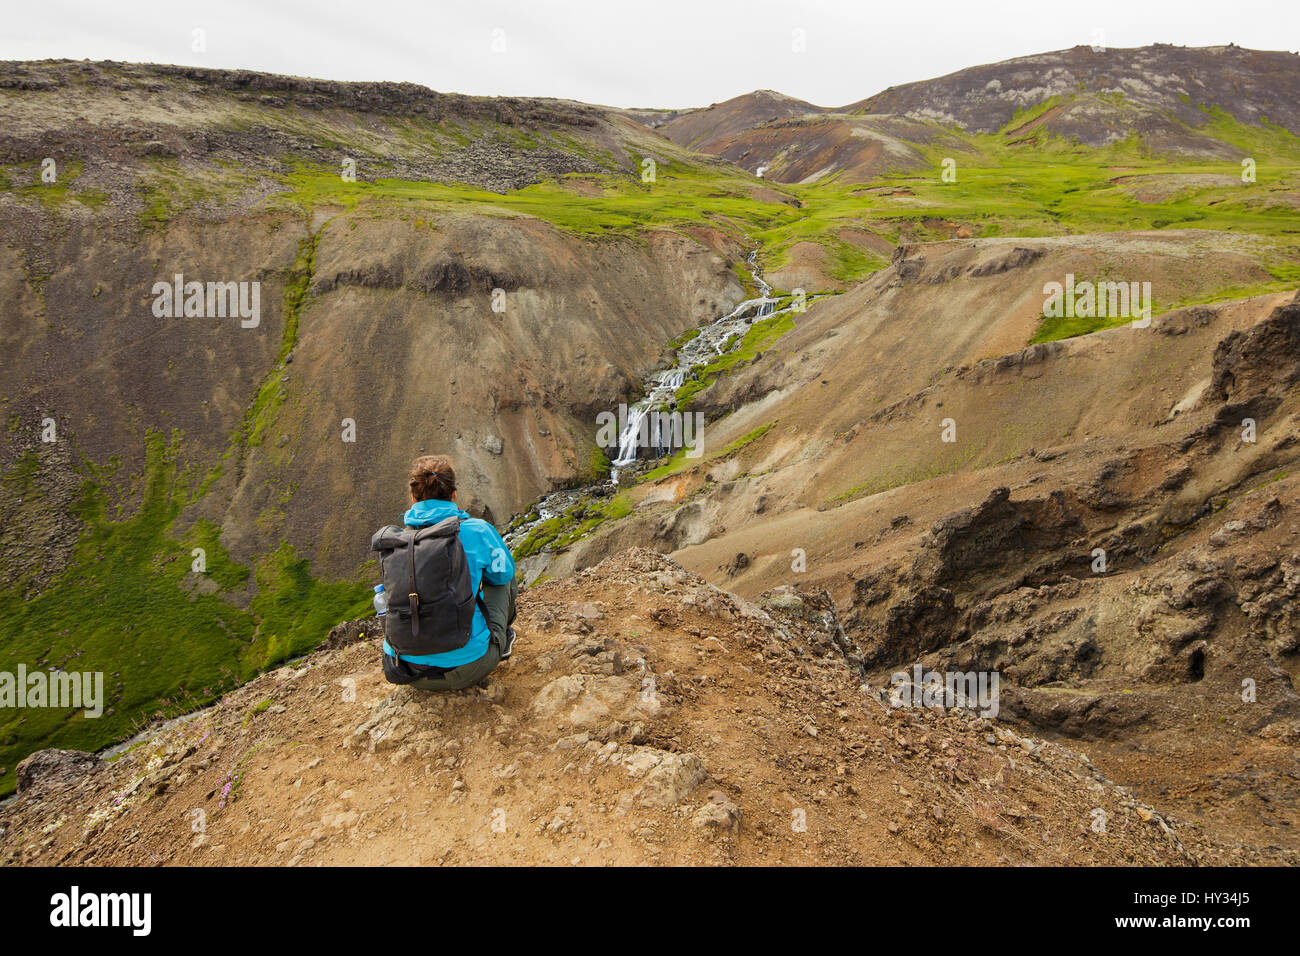 Iceland, Sudurland, Hveragerdi, Reykjadalur, Tourist looking at stream and waterfalls in rocky valley Stock Photo